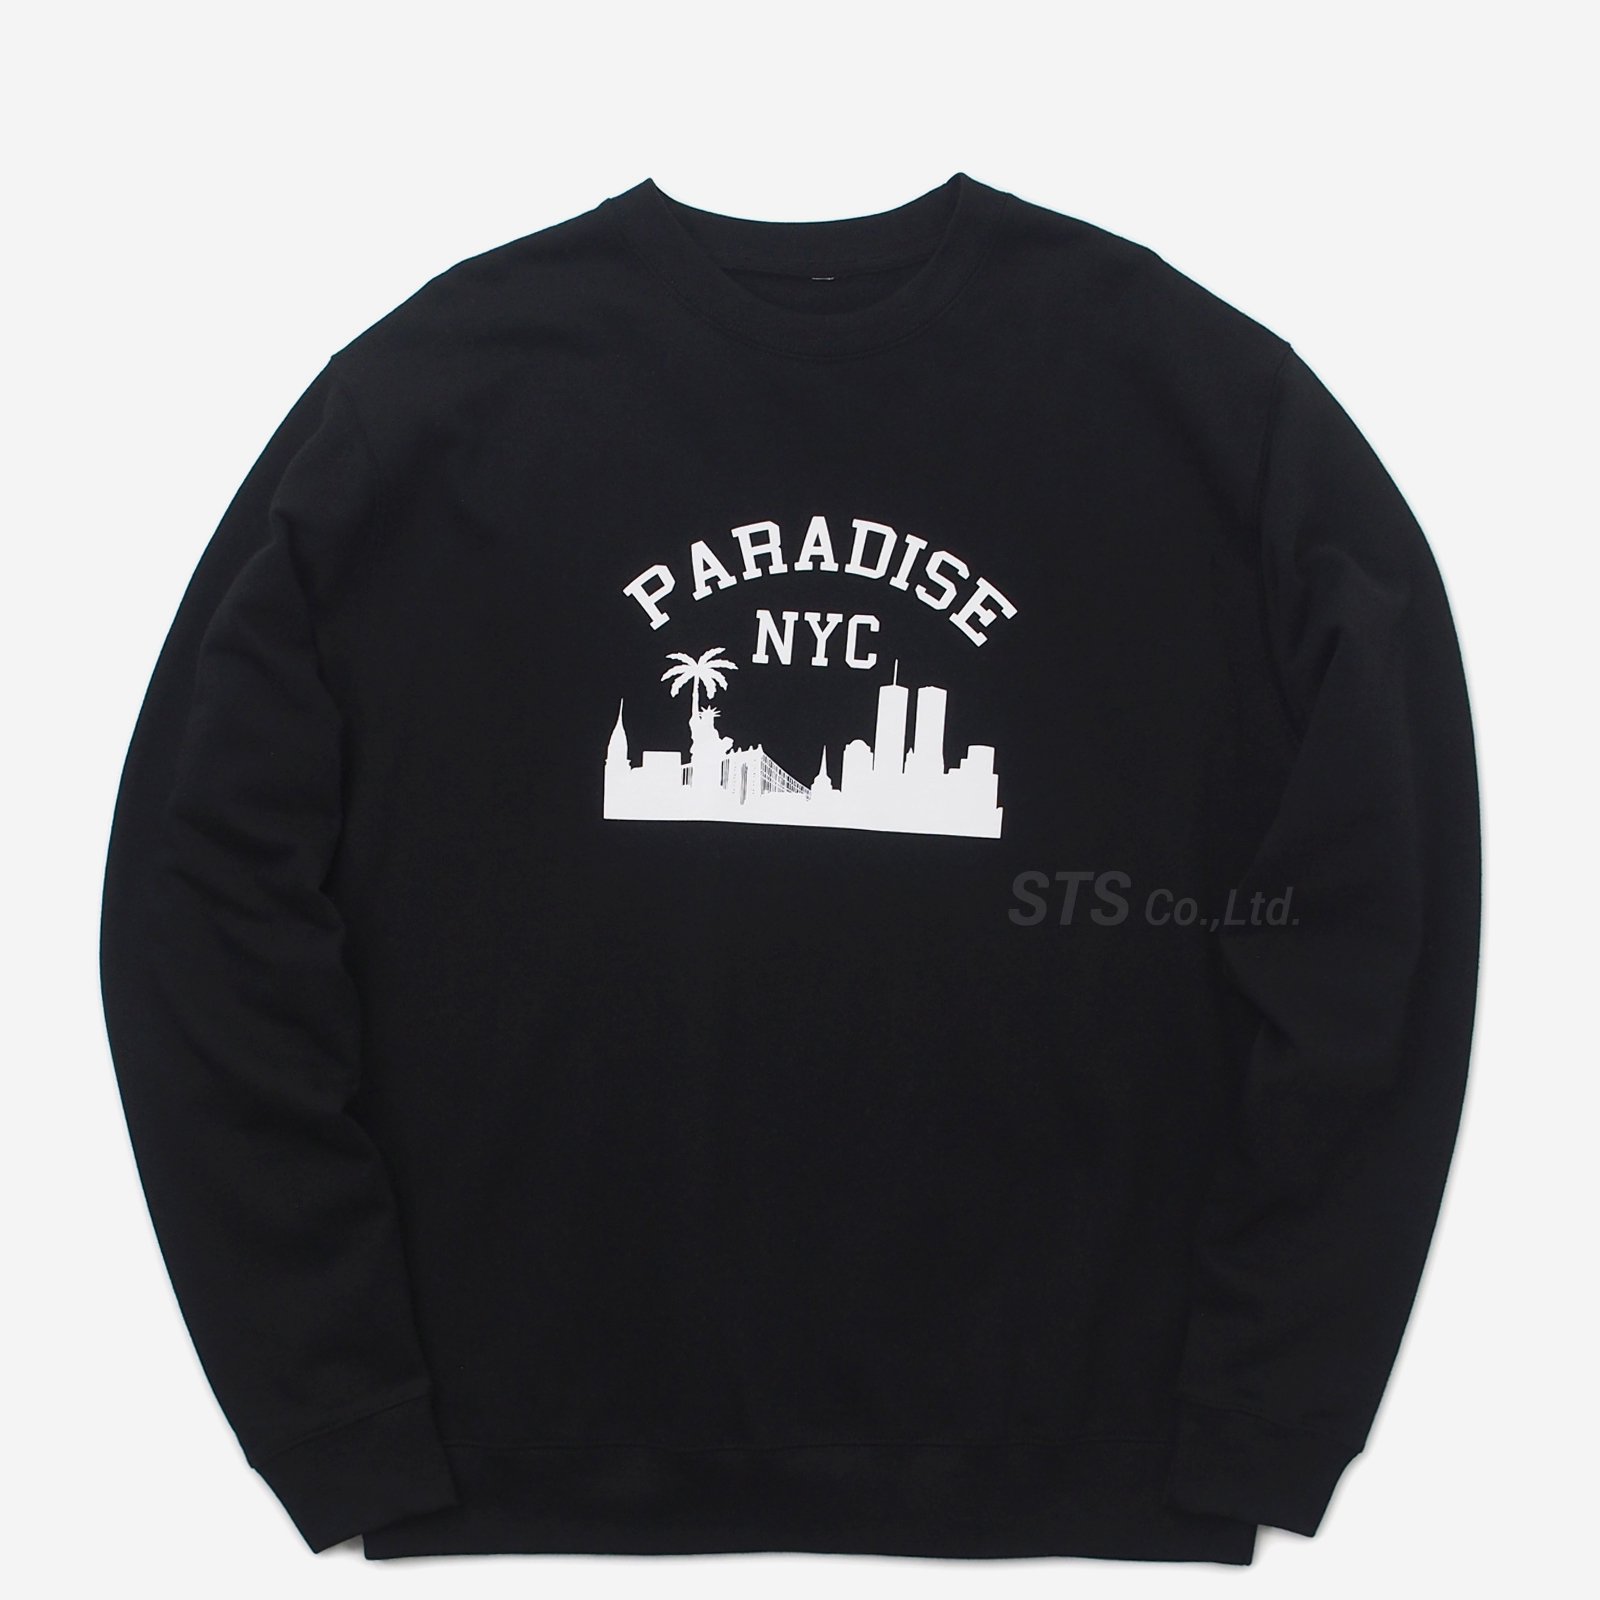 Paradis3 - Paradise NYC Crew - UG.SHAFT